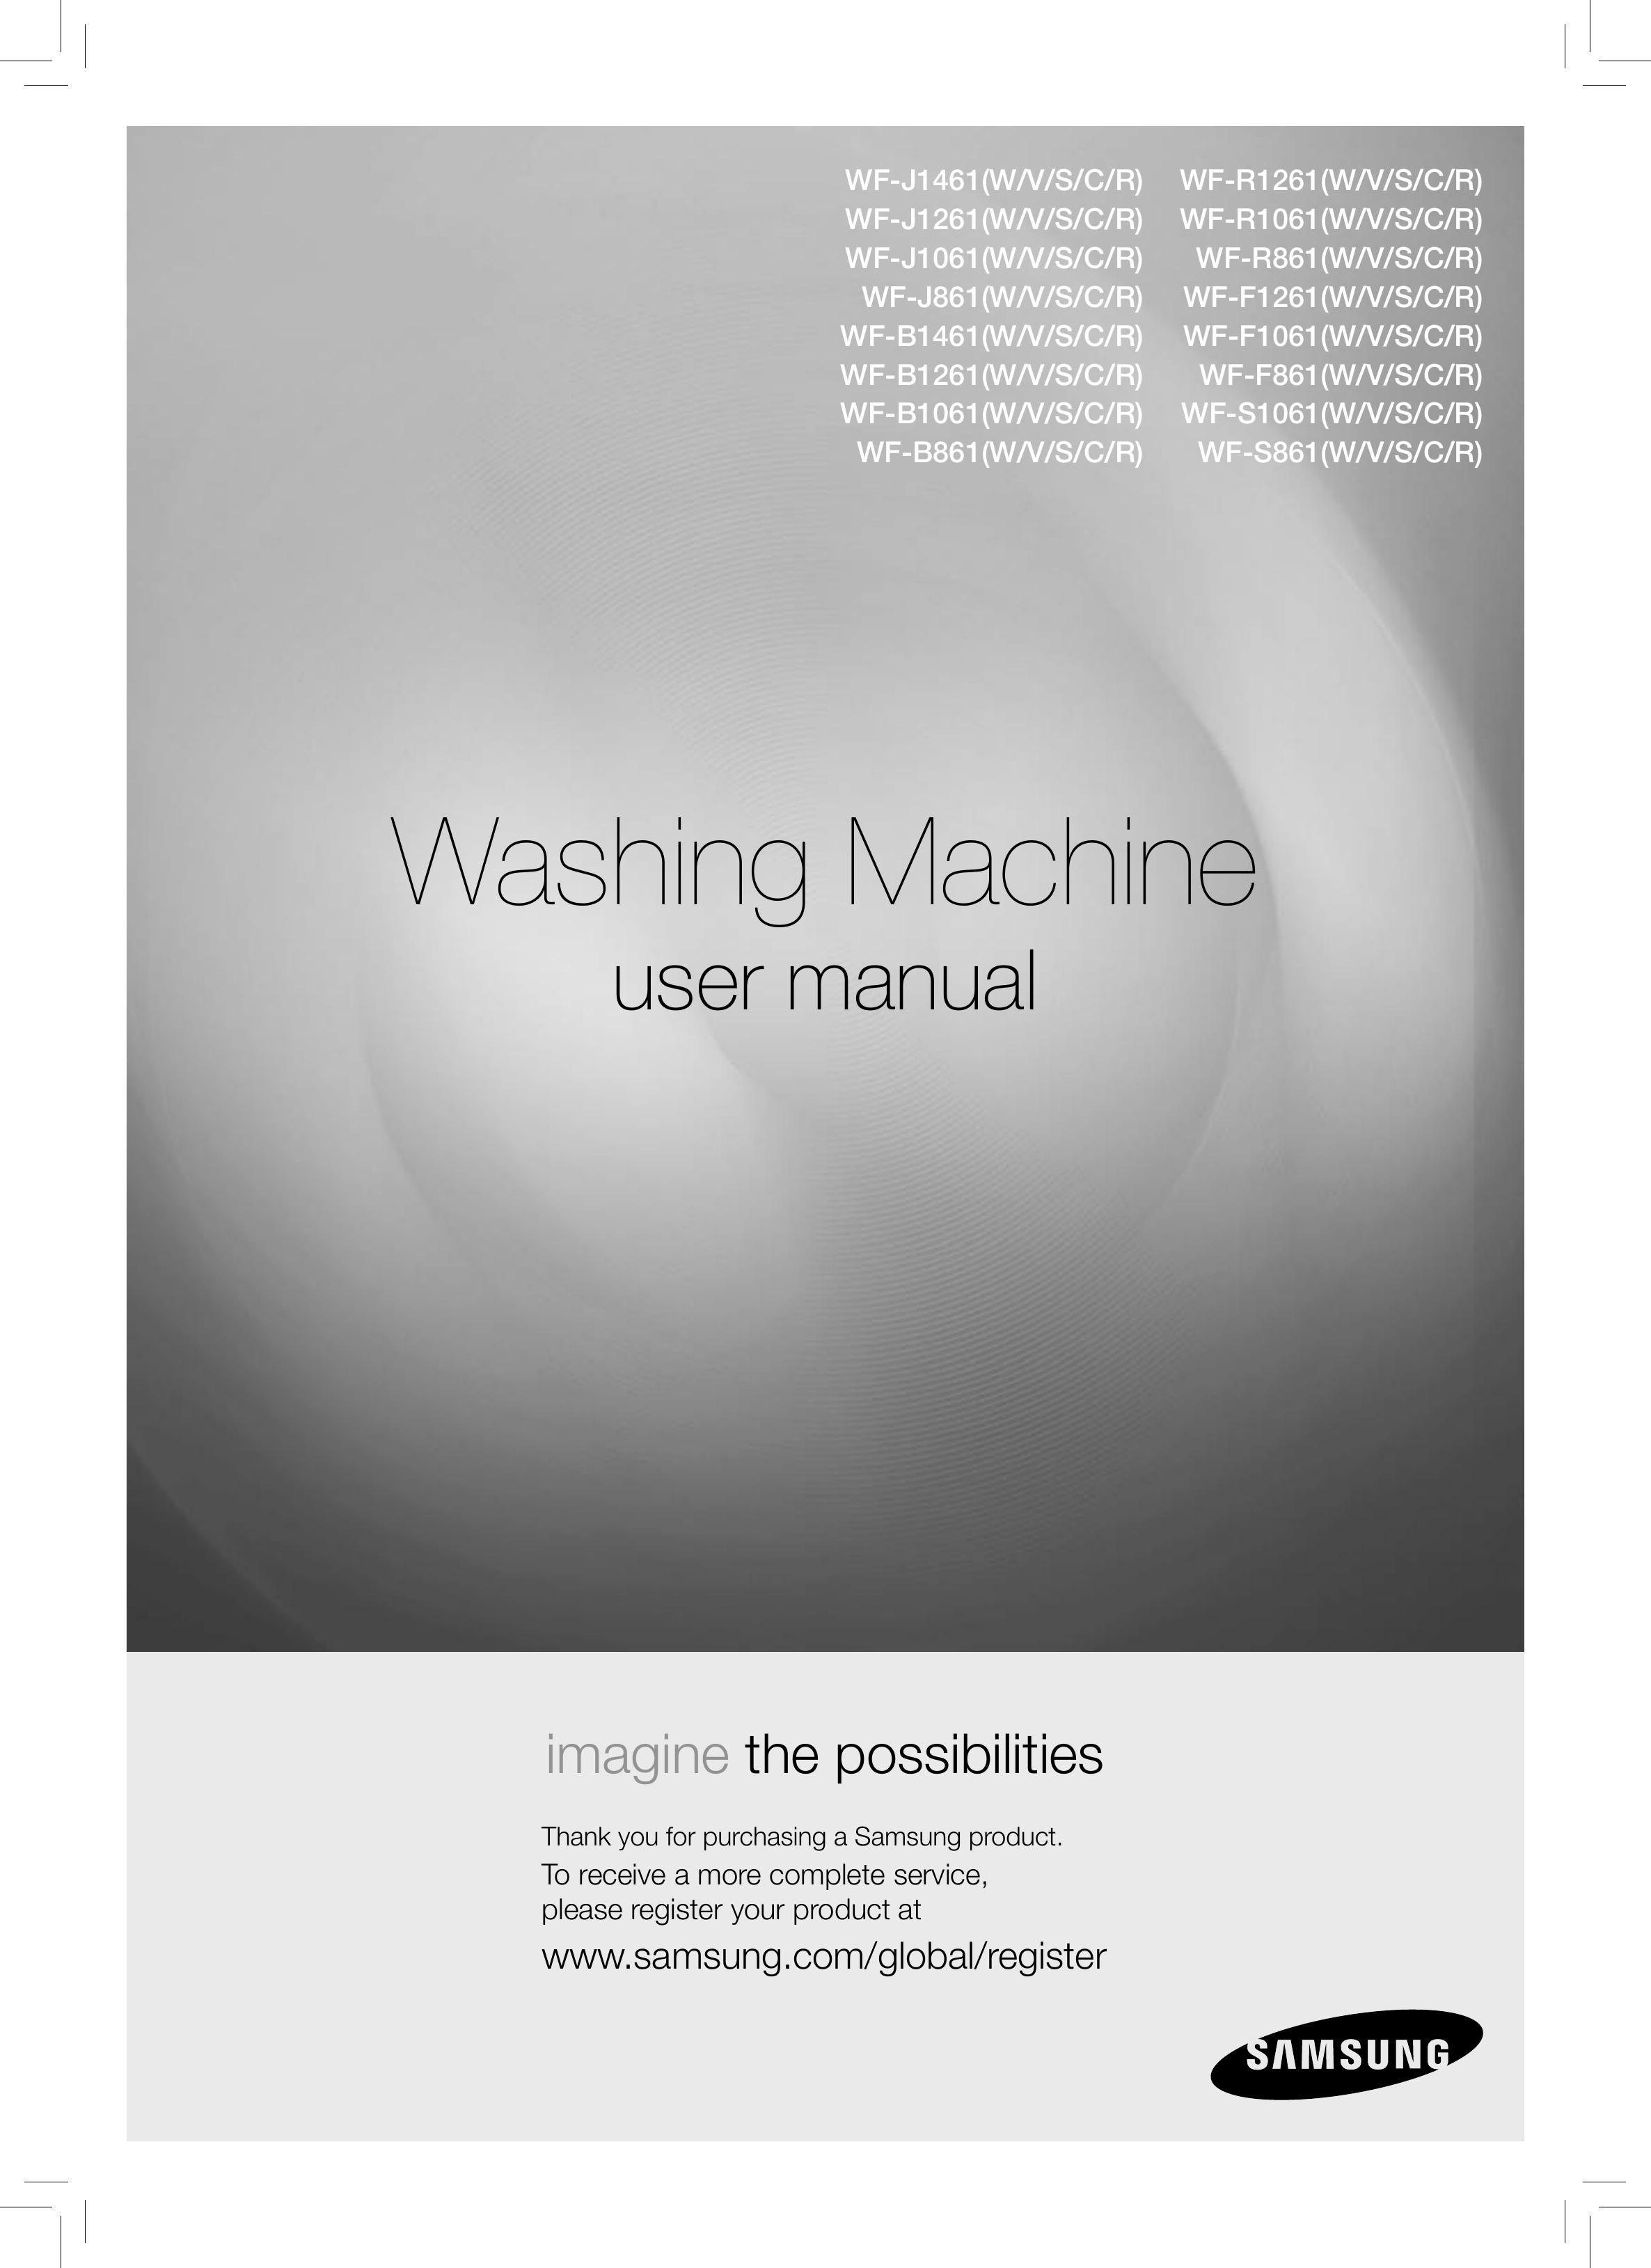 Samsung WF-F1061 Washer/Dryer User Manual